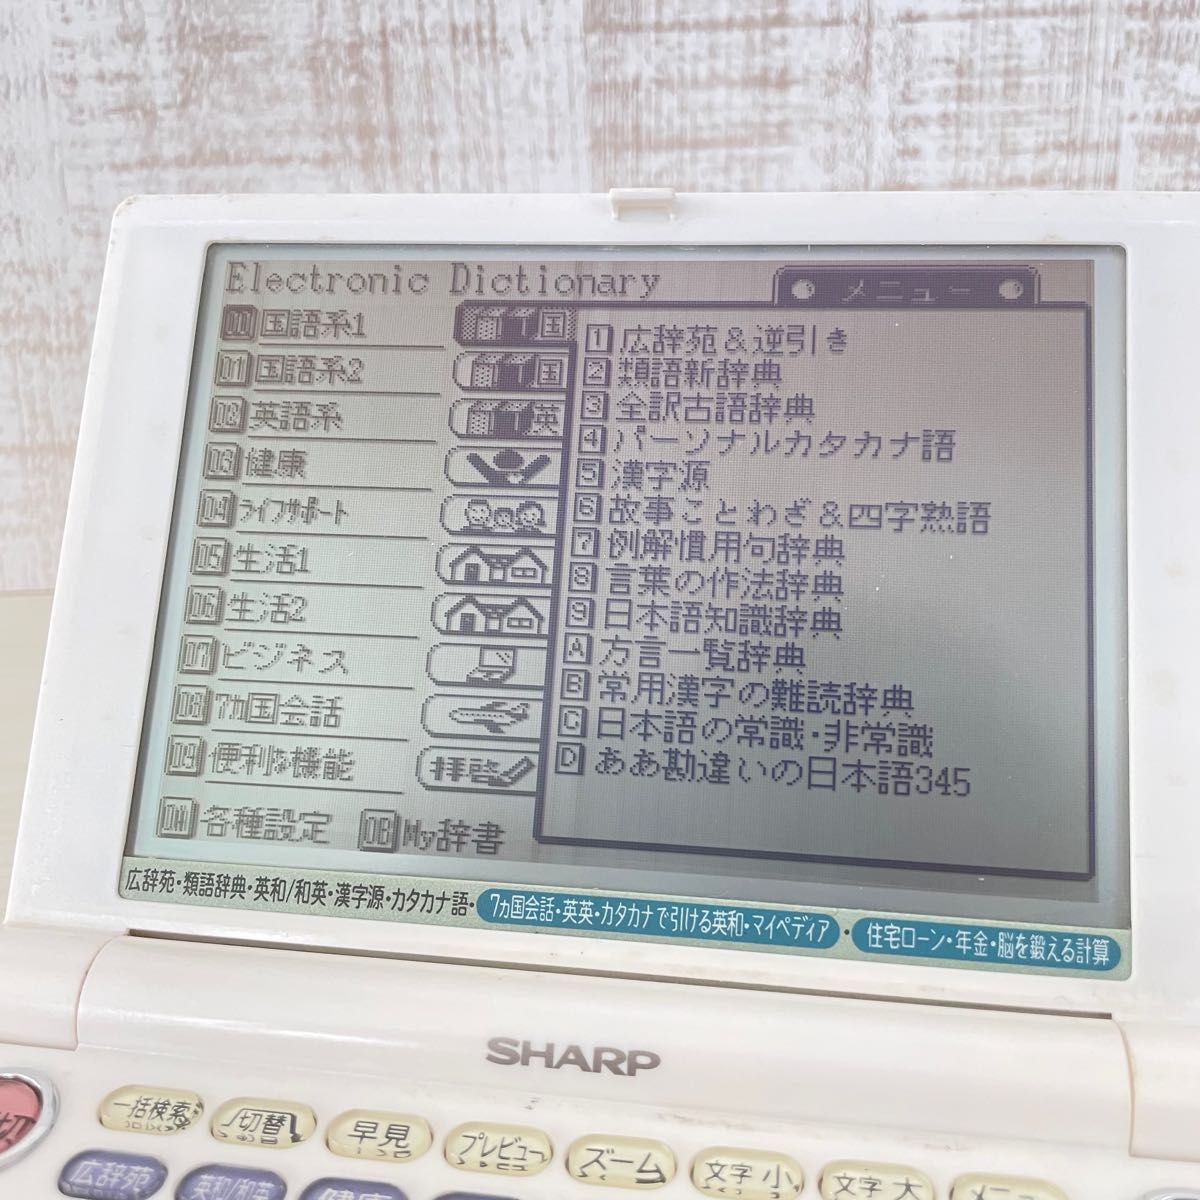 【動作確認済】 シャープ電子辞書 SHARP PW-A8300